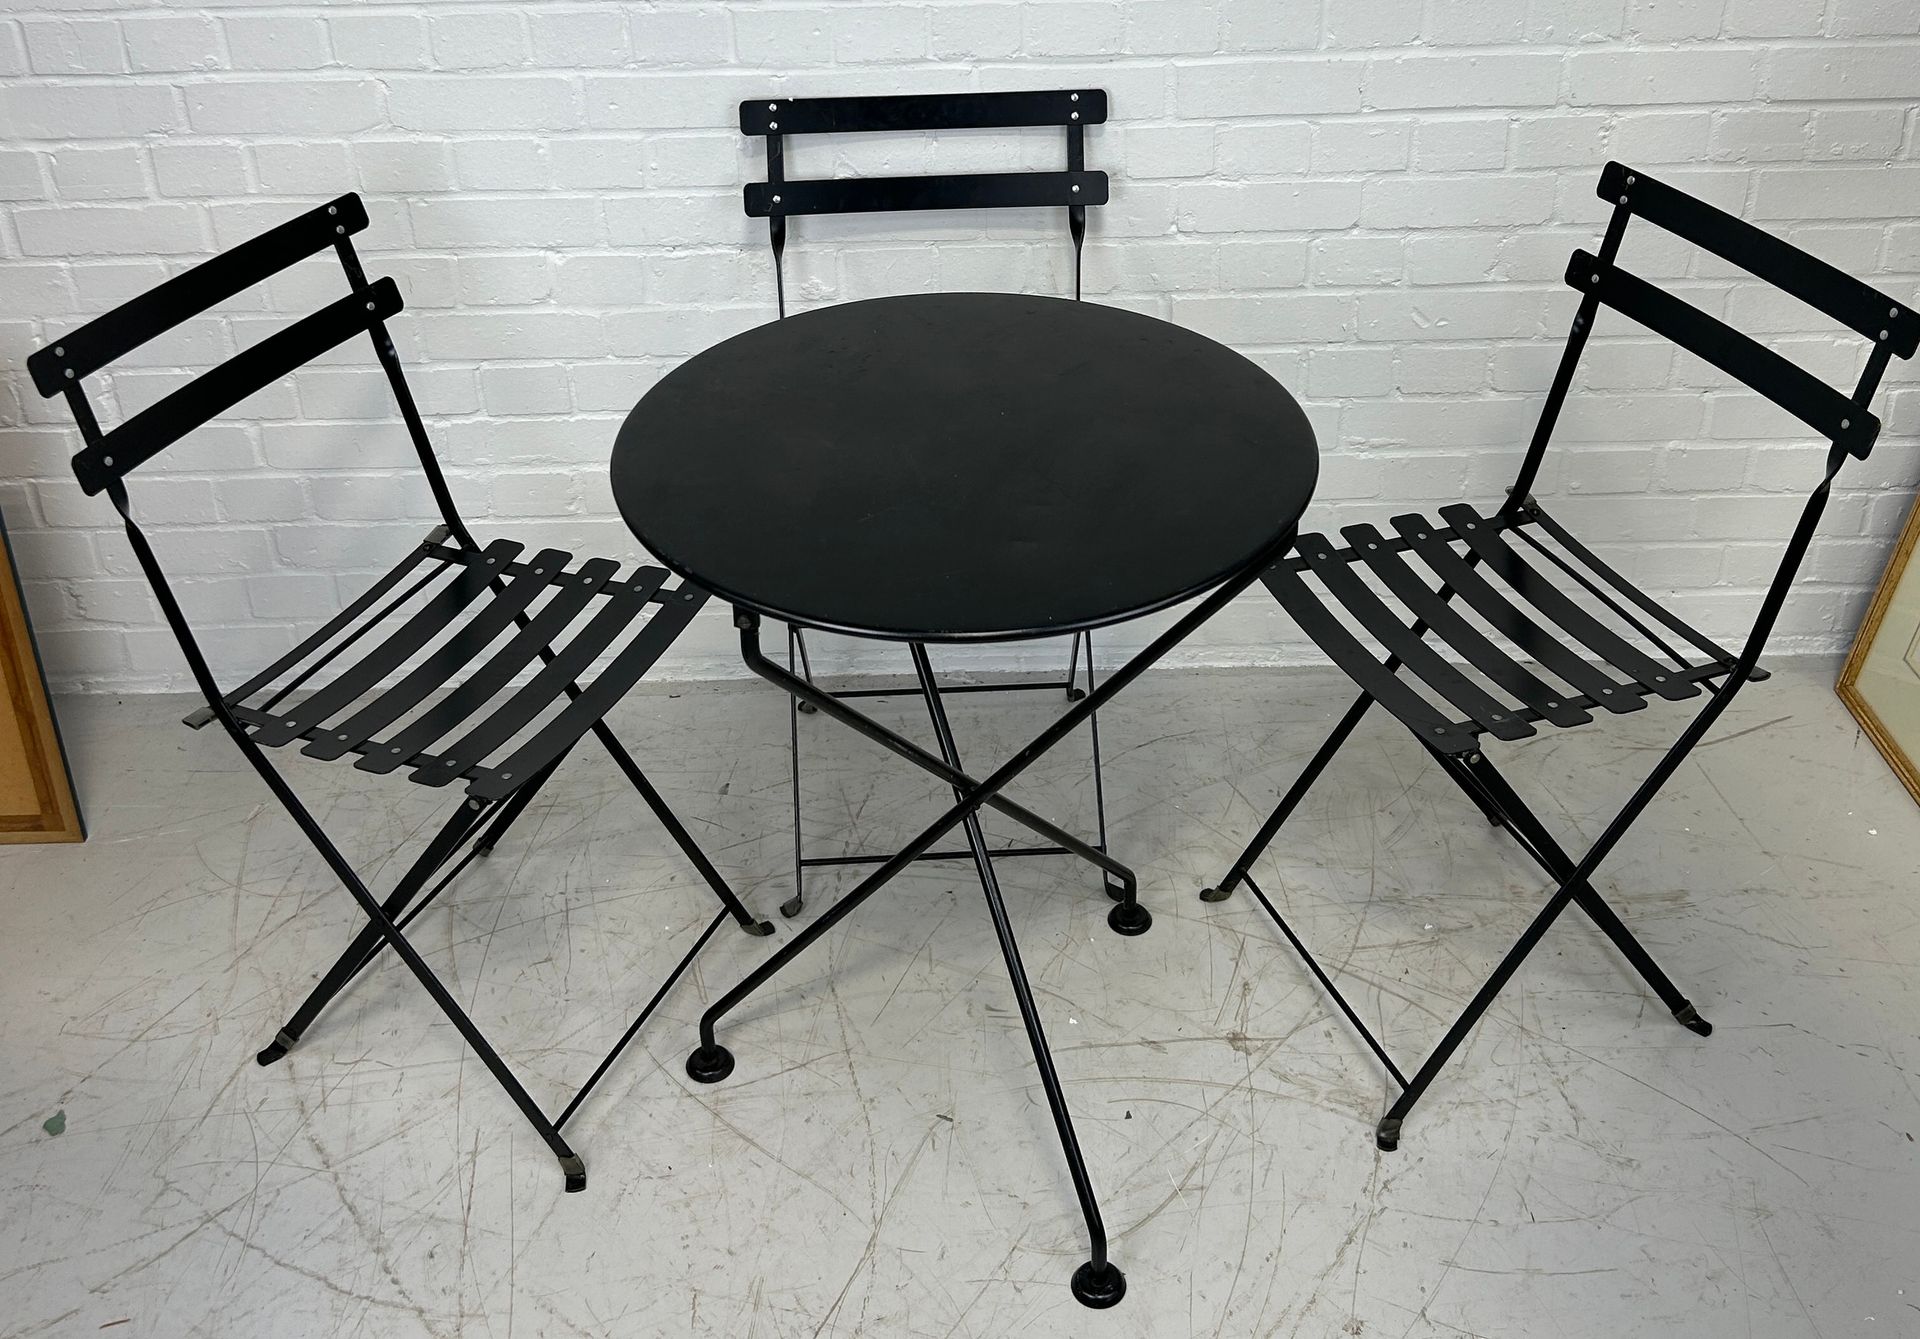 Null 一套金属户外桌椅、 

桌子 72 厘米 x 60 厘米
椅子 80 厘米 x 36 厘米 x 36 厘米